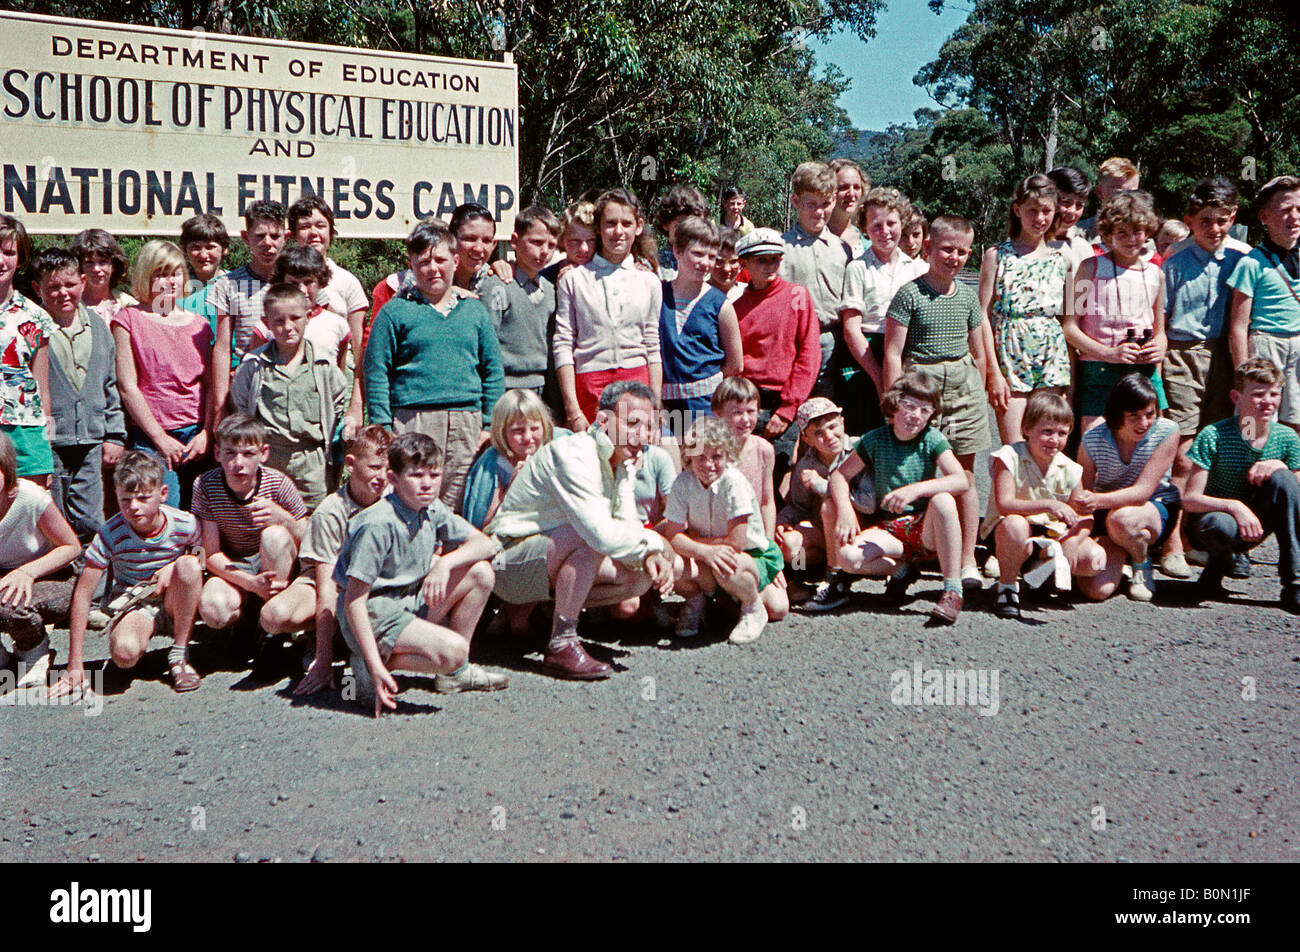 Migrant children at a fitness camp, Sydney, Australia, 1961 Stock Photo